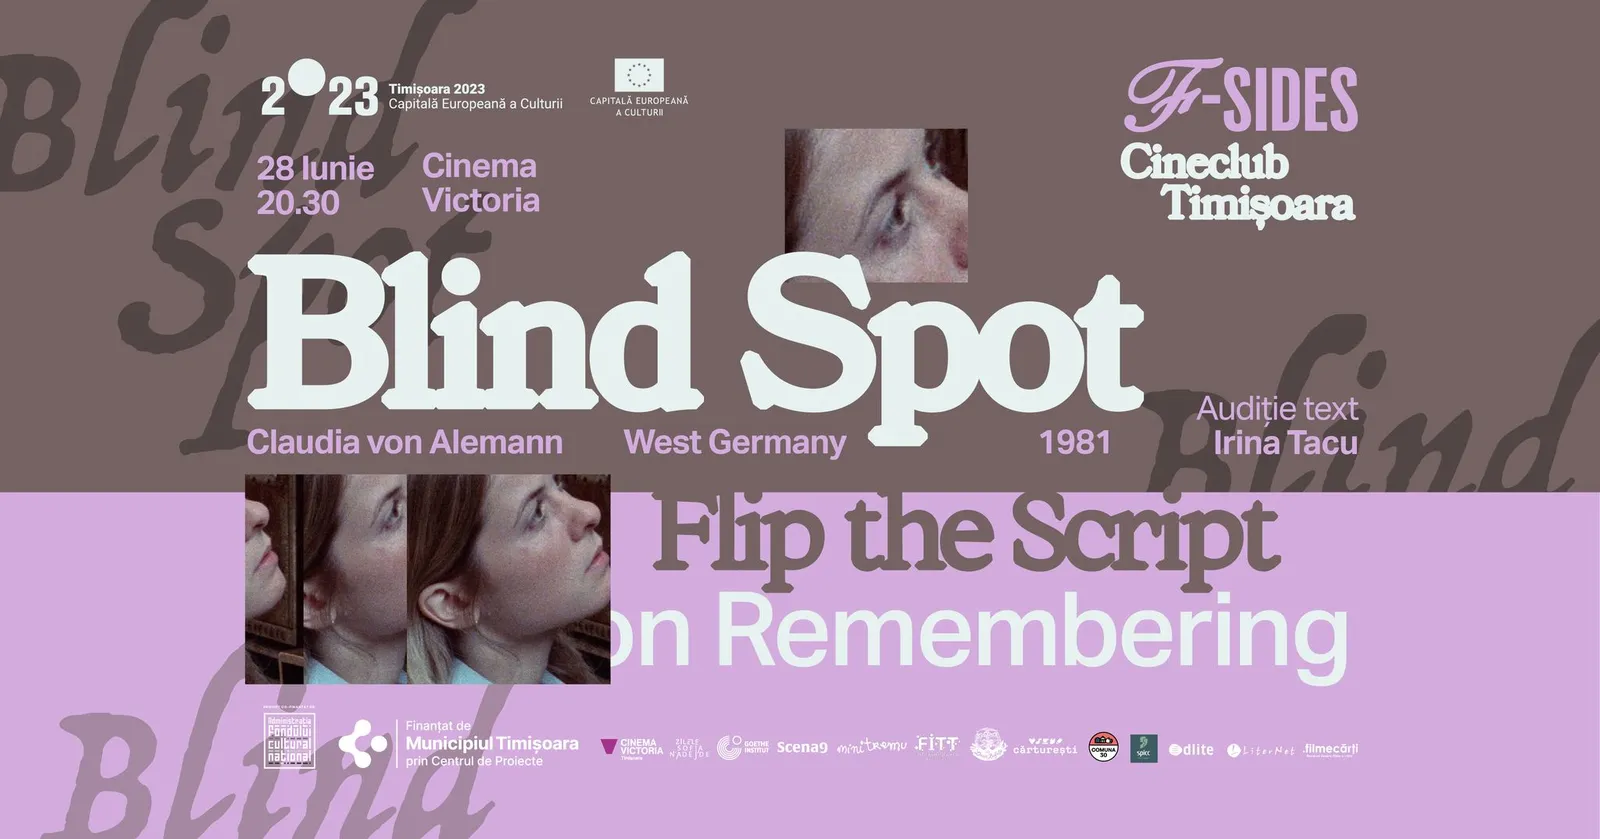 Blind Spot (1981) • Proiecție F-SIDES Cineclub Timișoara • Audiție text: Irina Tacu